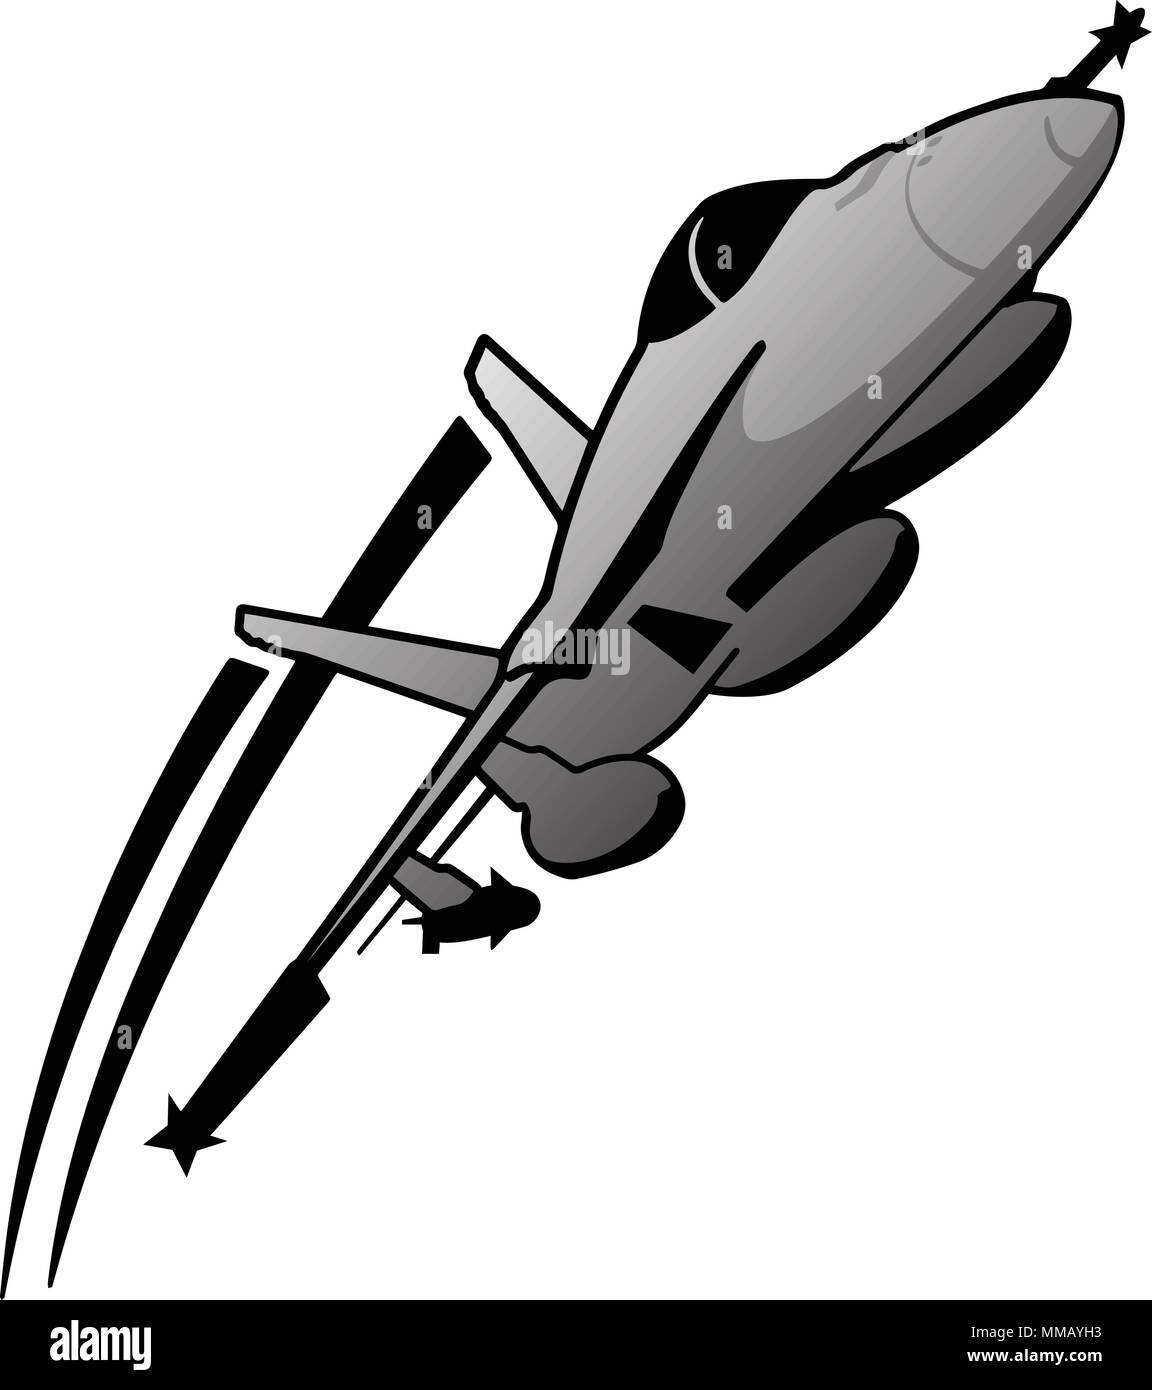 Militärische Fighter Jet Flugzeug Vector Illustration Stock Vektor